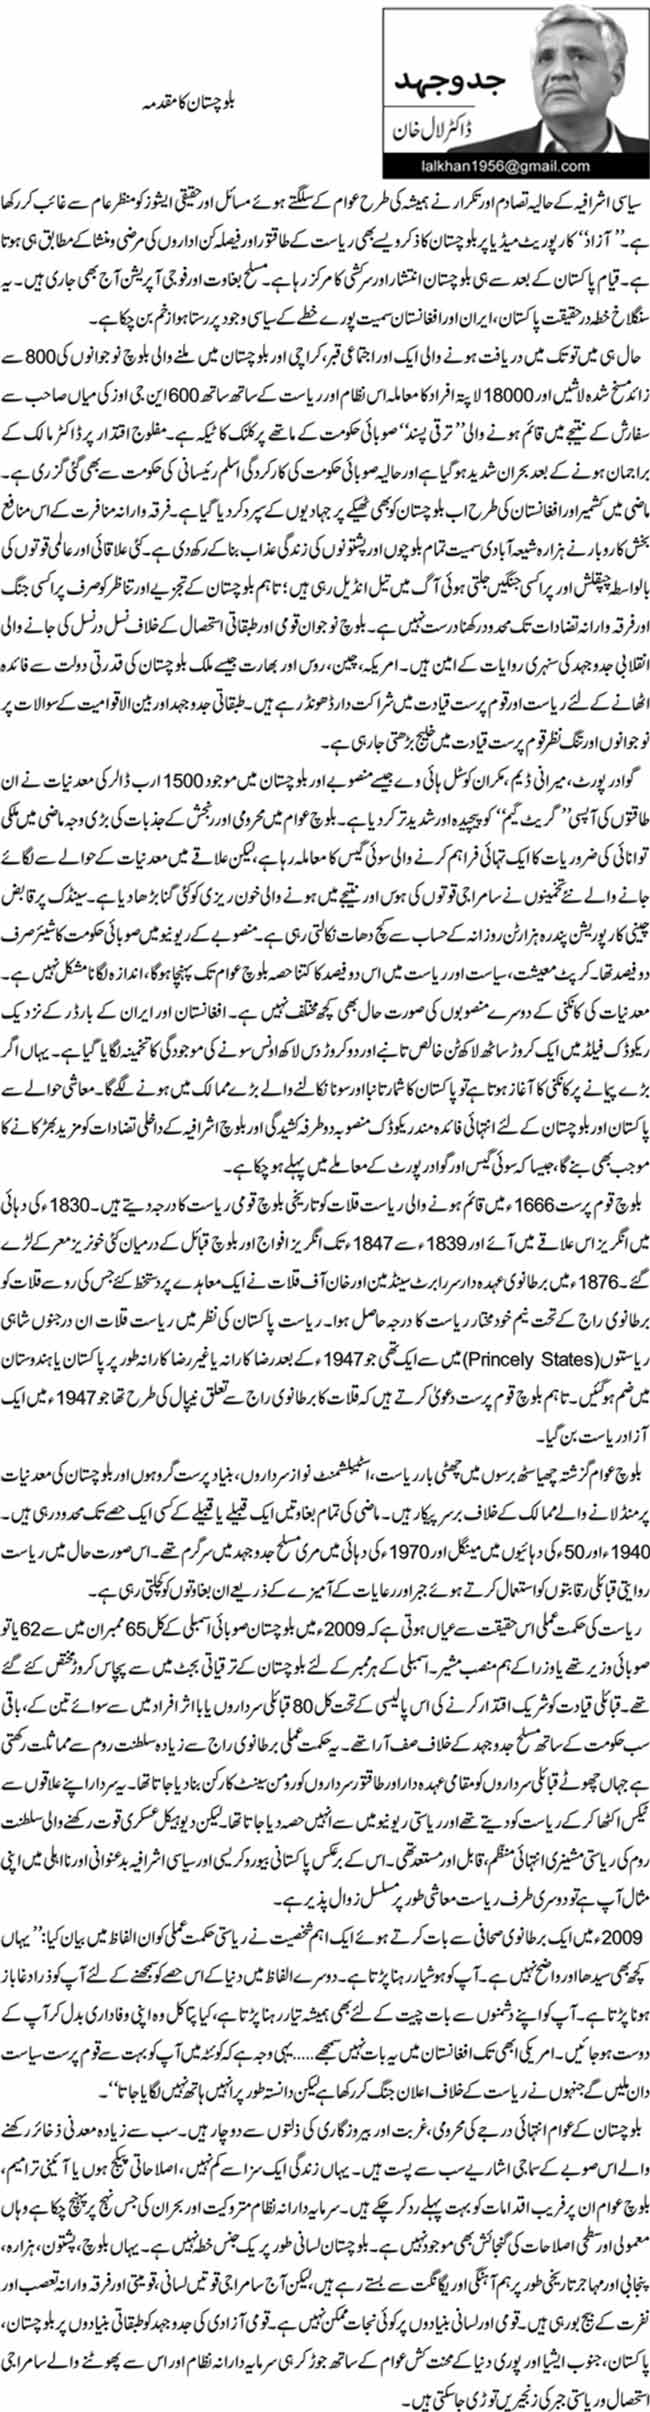 بلوچستان کا مقدمہ 